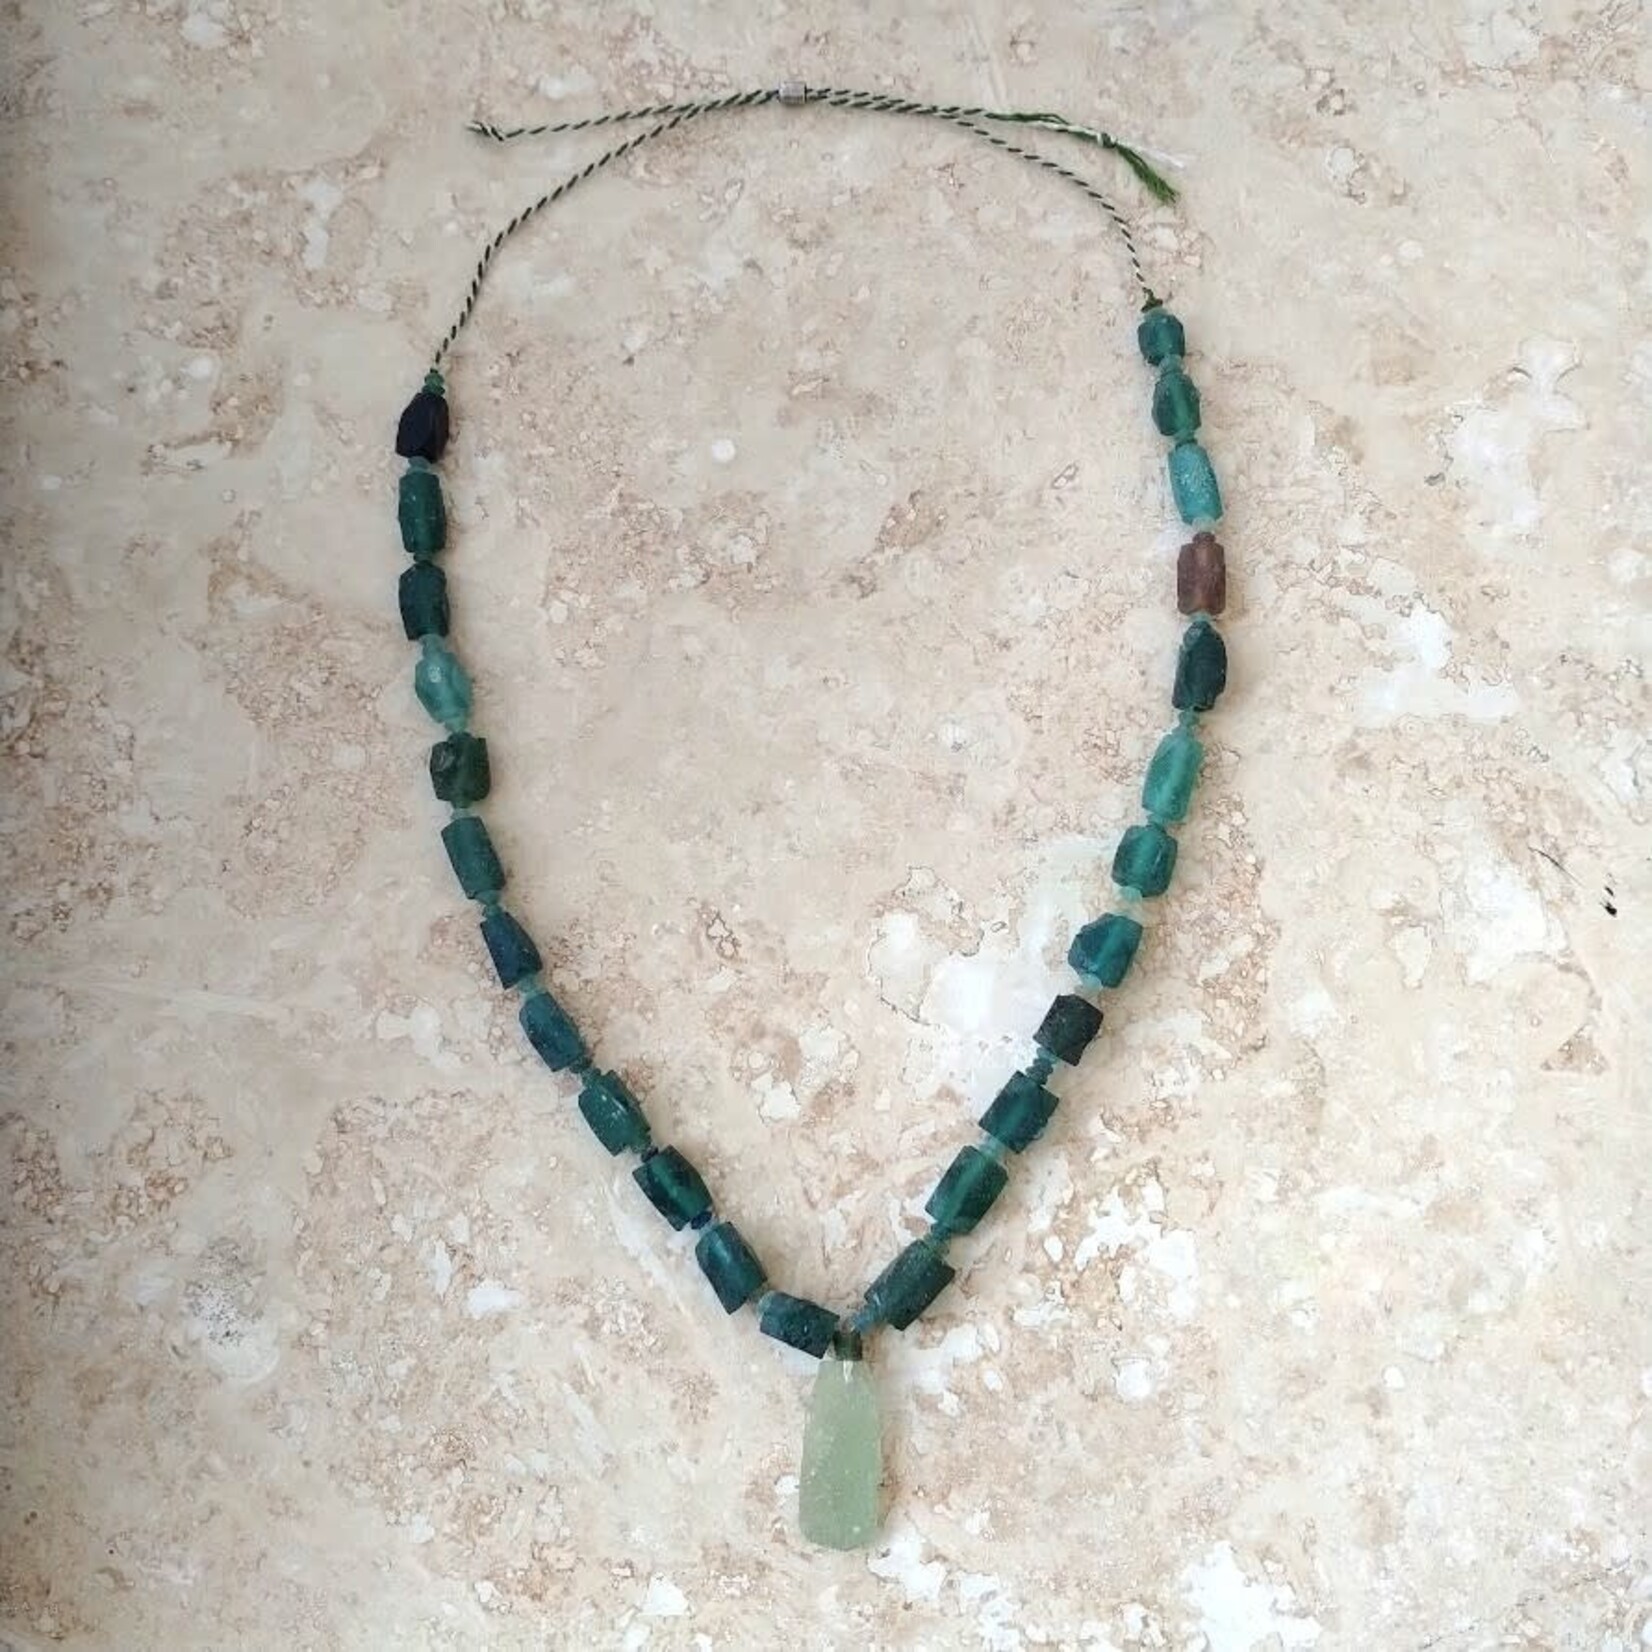 Roman Glass Necklace - Ready to Wear